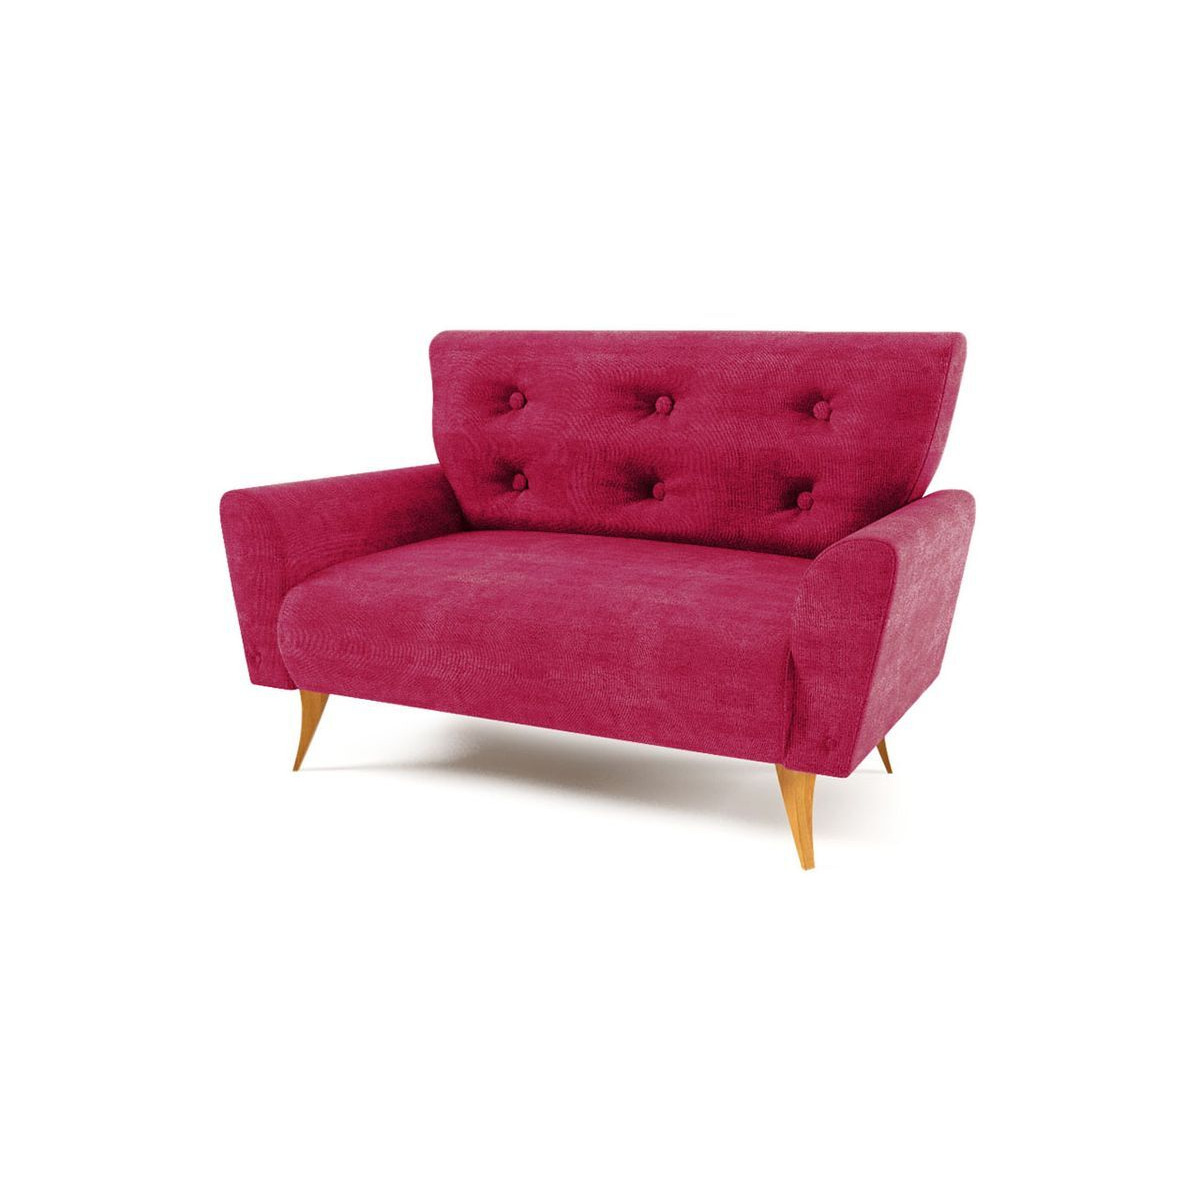 Diva 2 Seater Sofa, pink - image 1